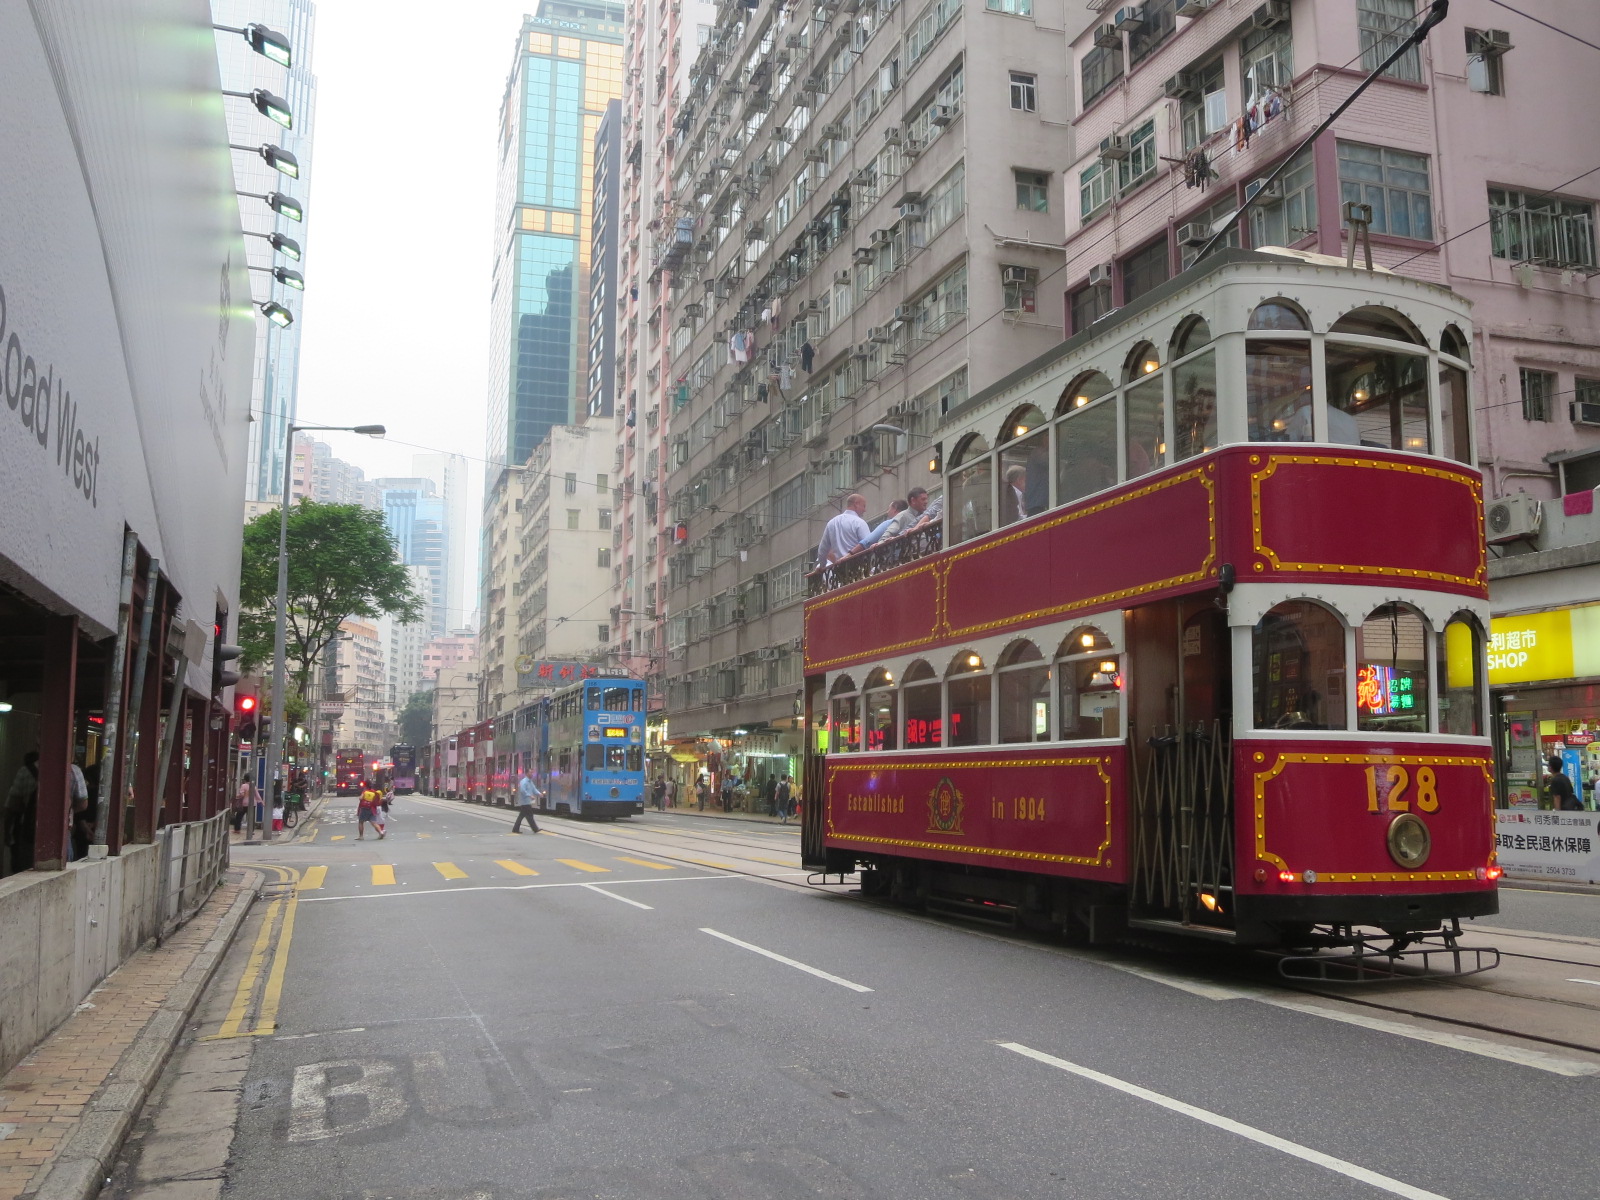 A vintage double-decker tram in Hong Kong